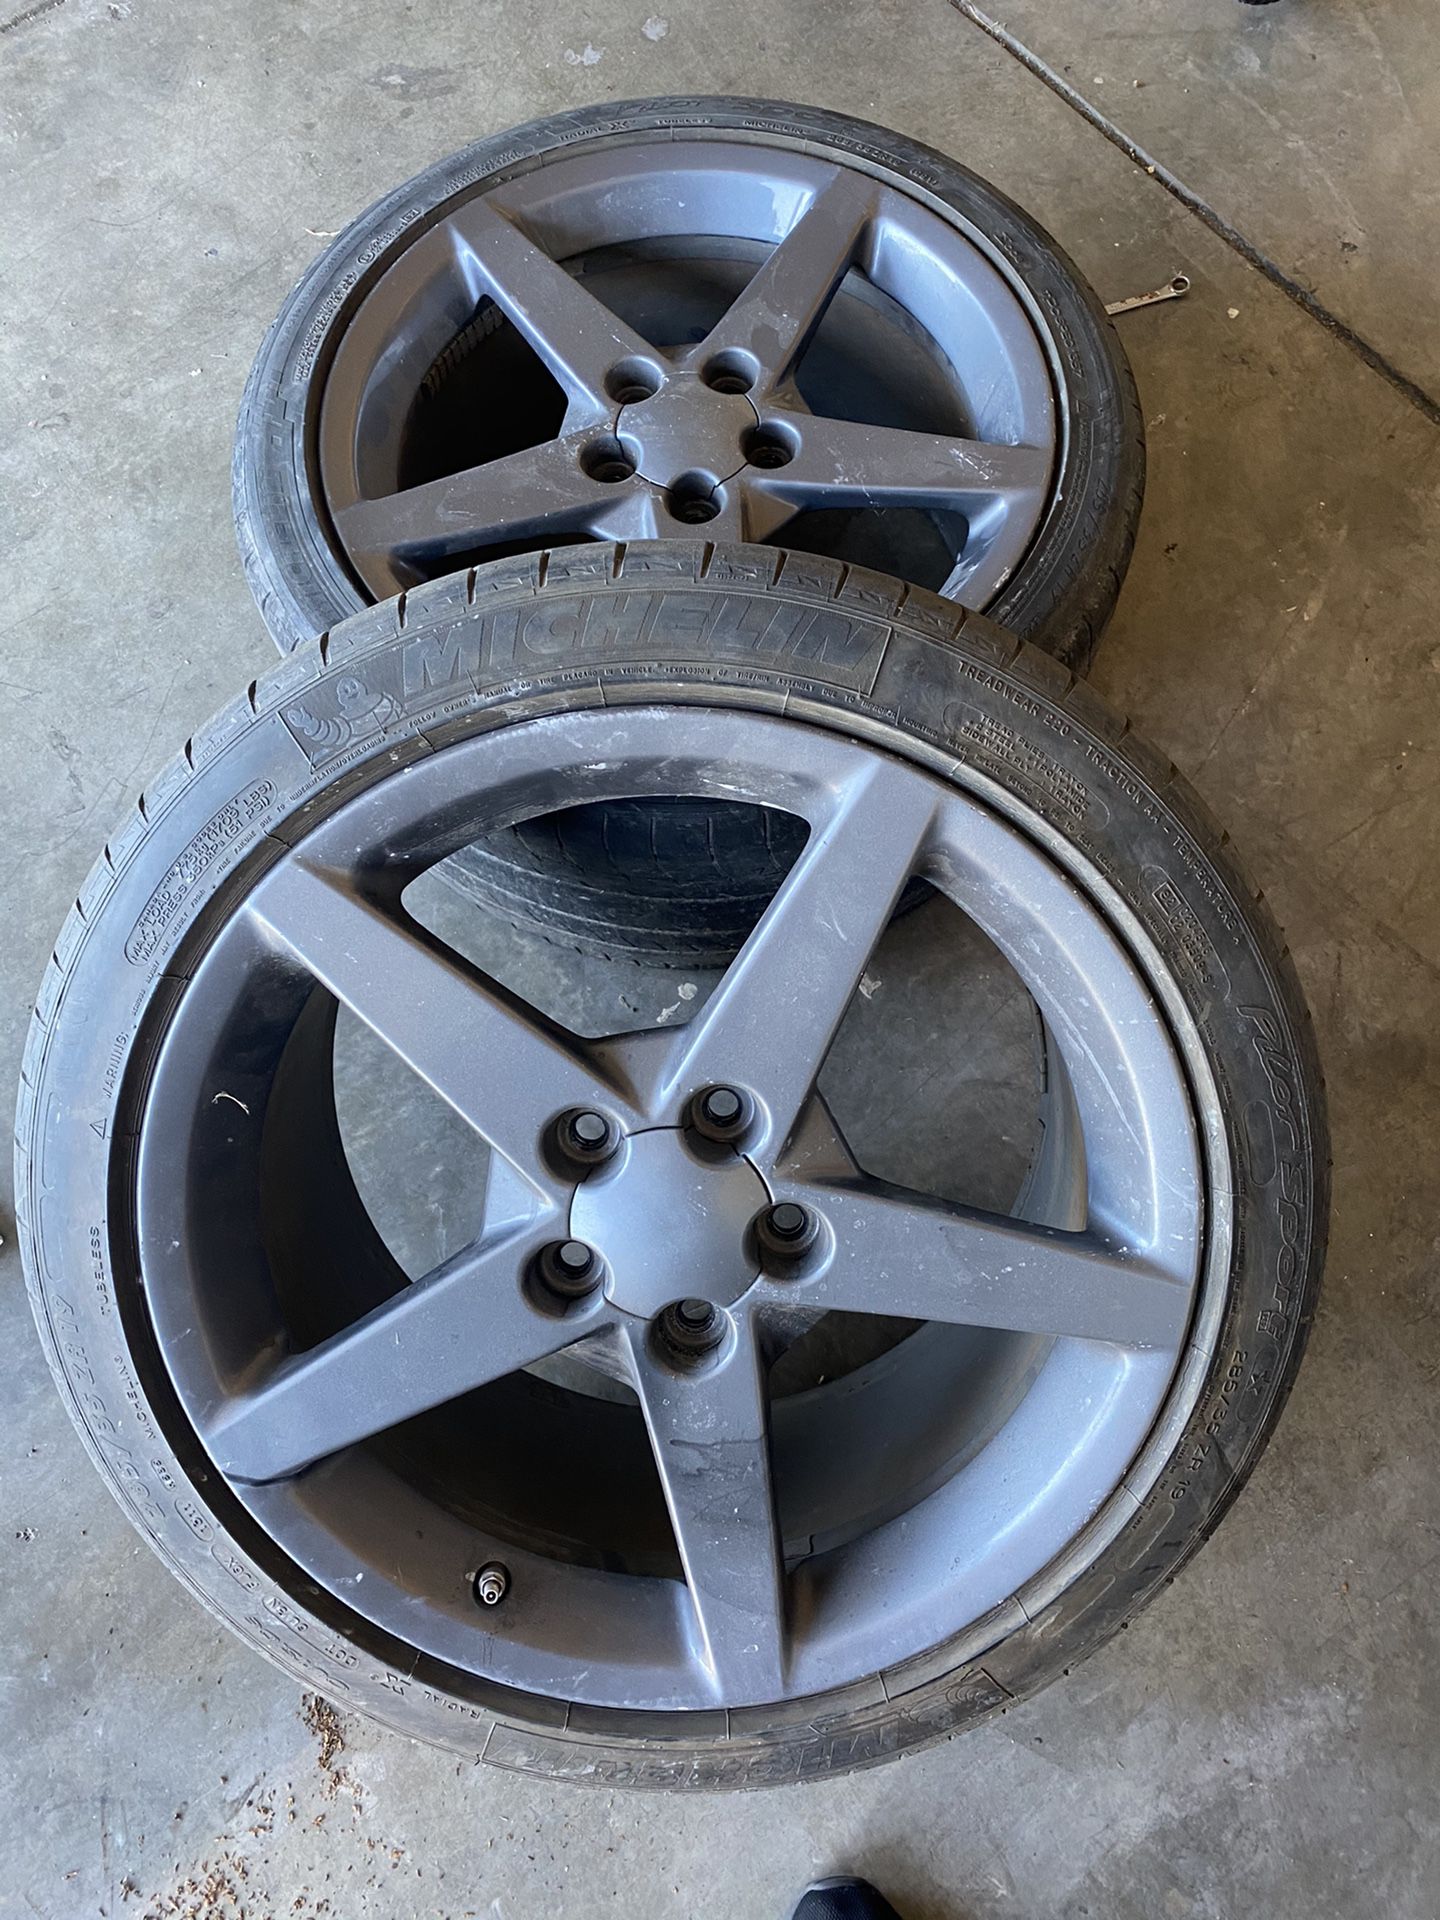 Corvette wheels 2’rims only both 19’inch